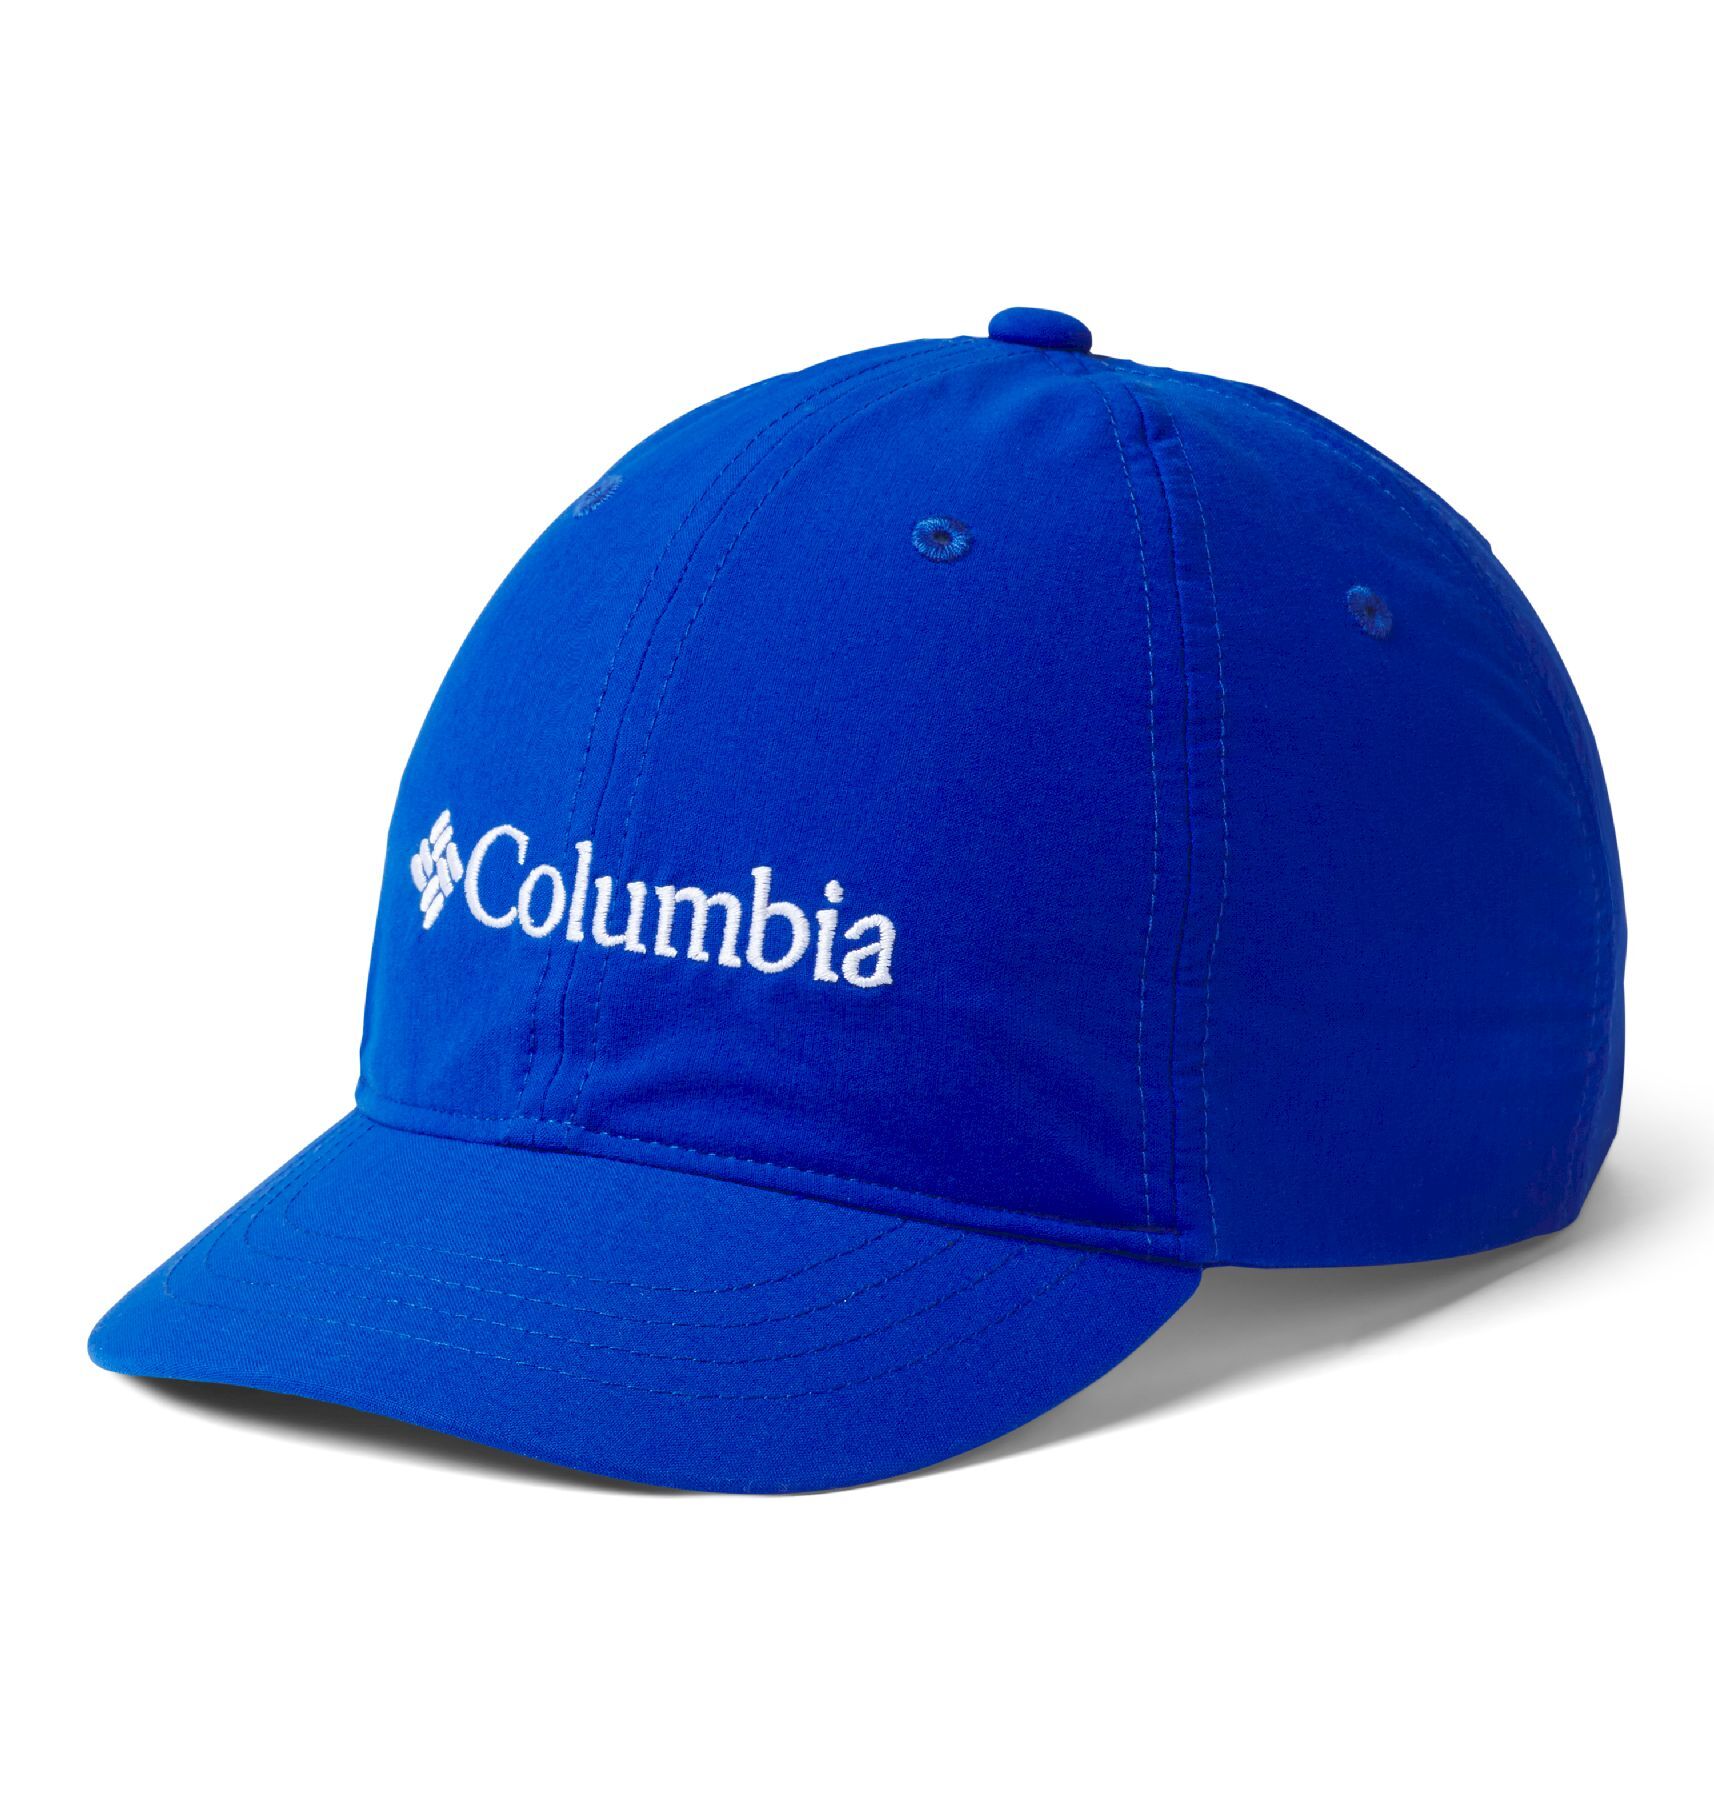 Columbia Youth Adjustable Ball Cap - Cap - Kids